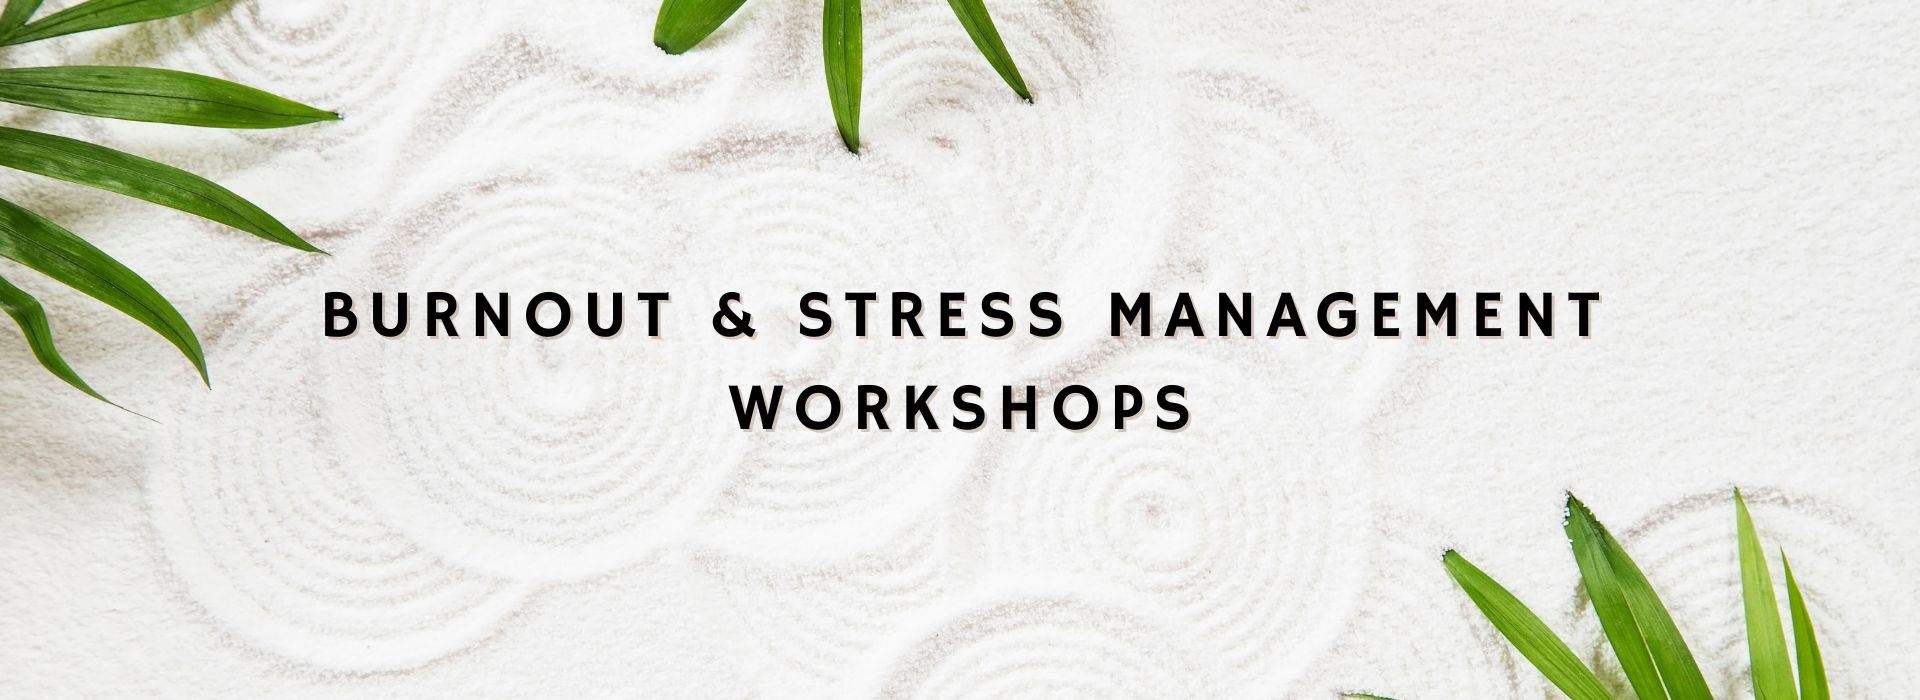 burnout workshop and stress management title picture